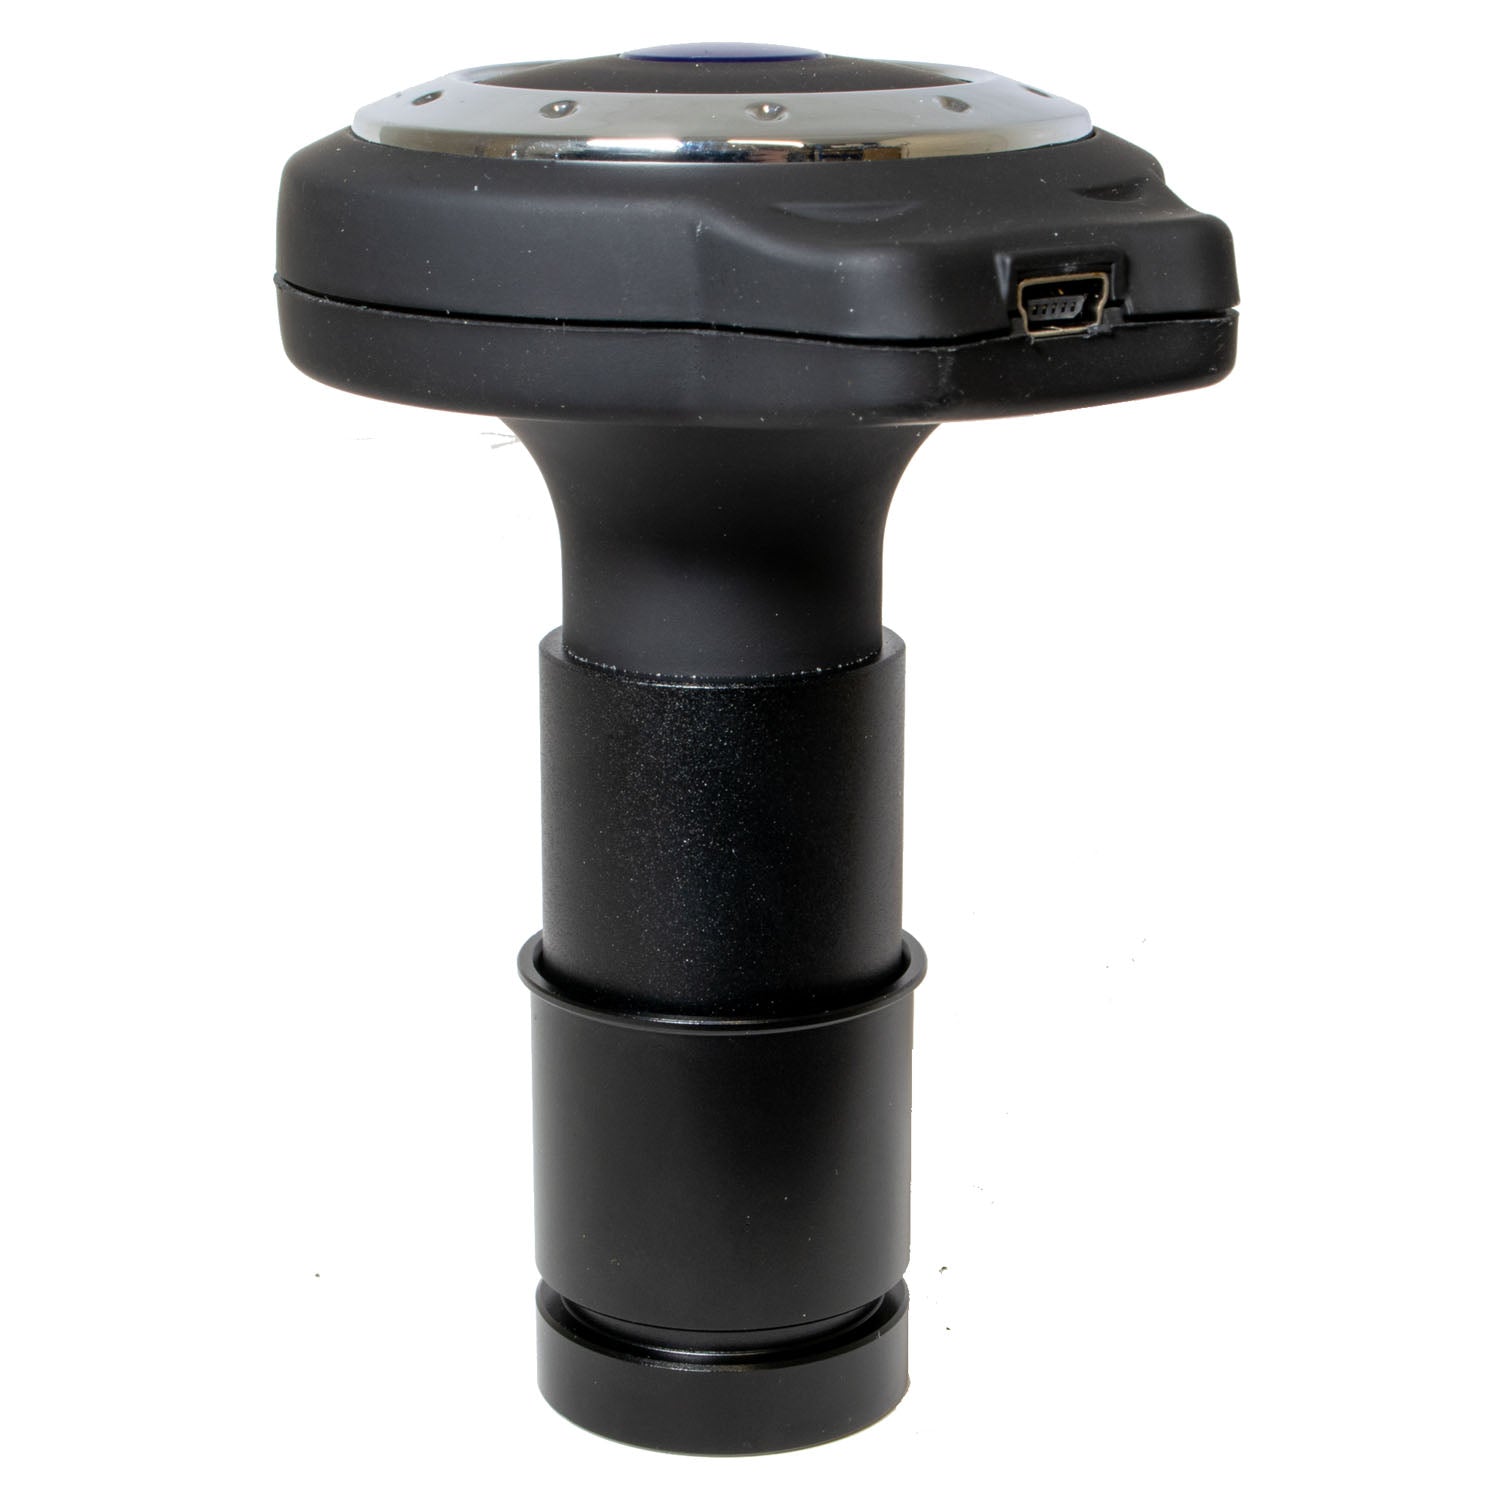 Eyepiece microscope (professional USB microscope)